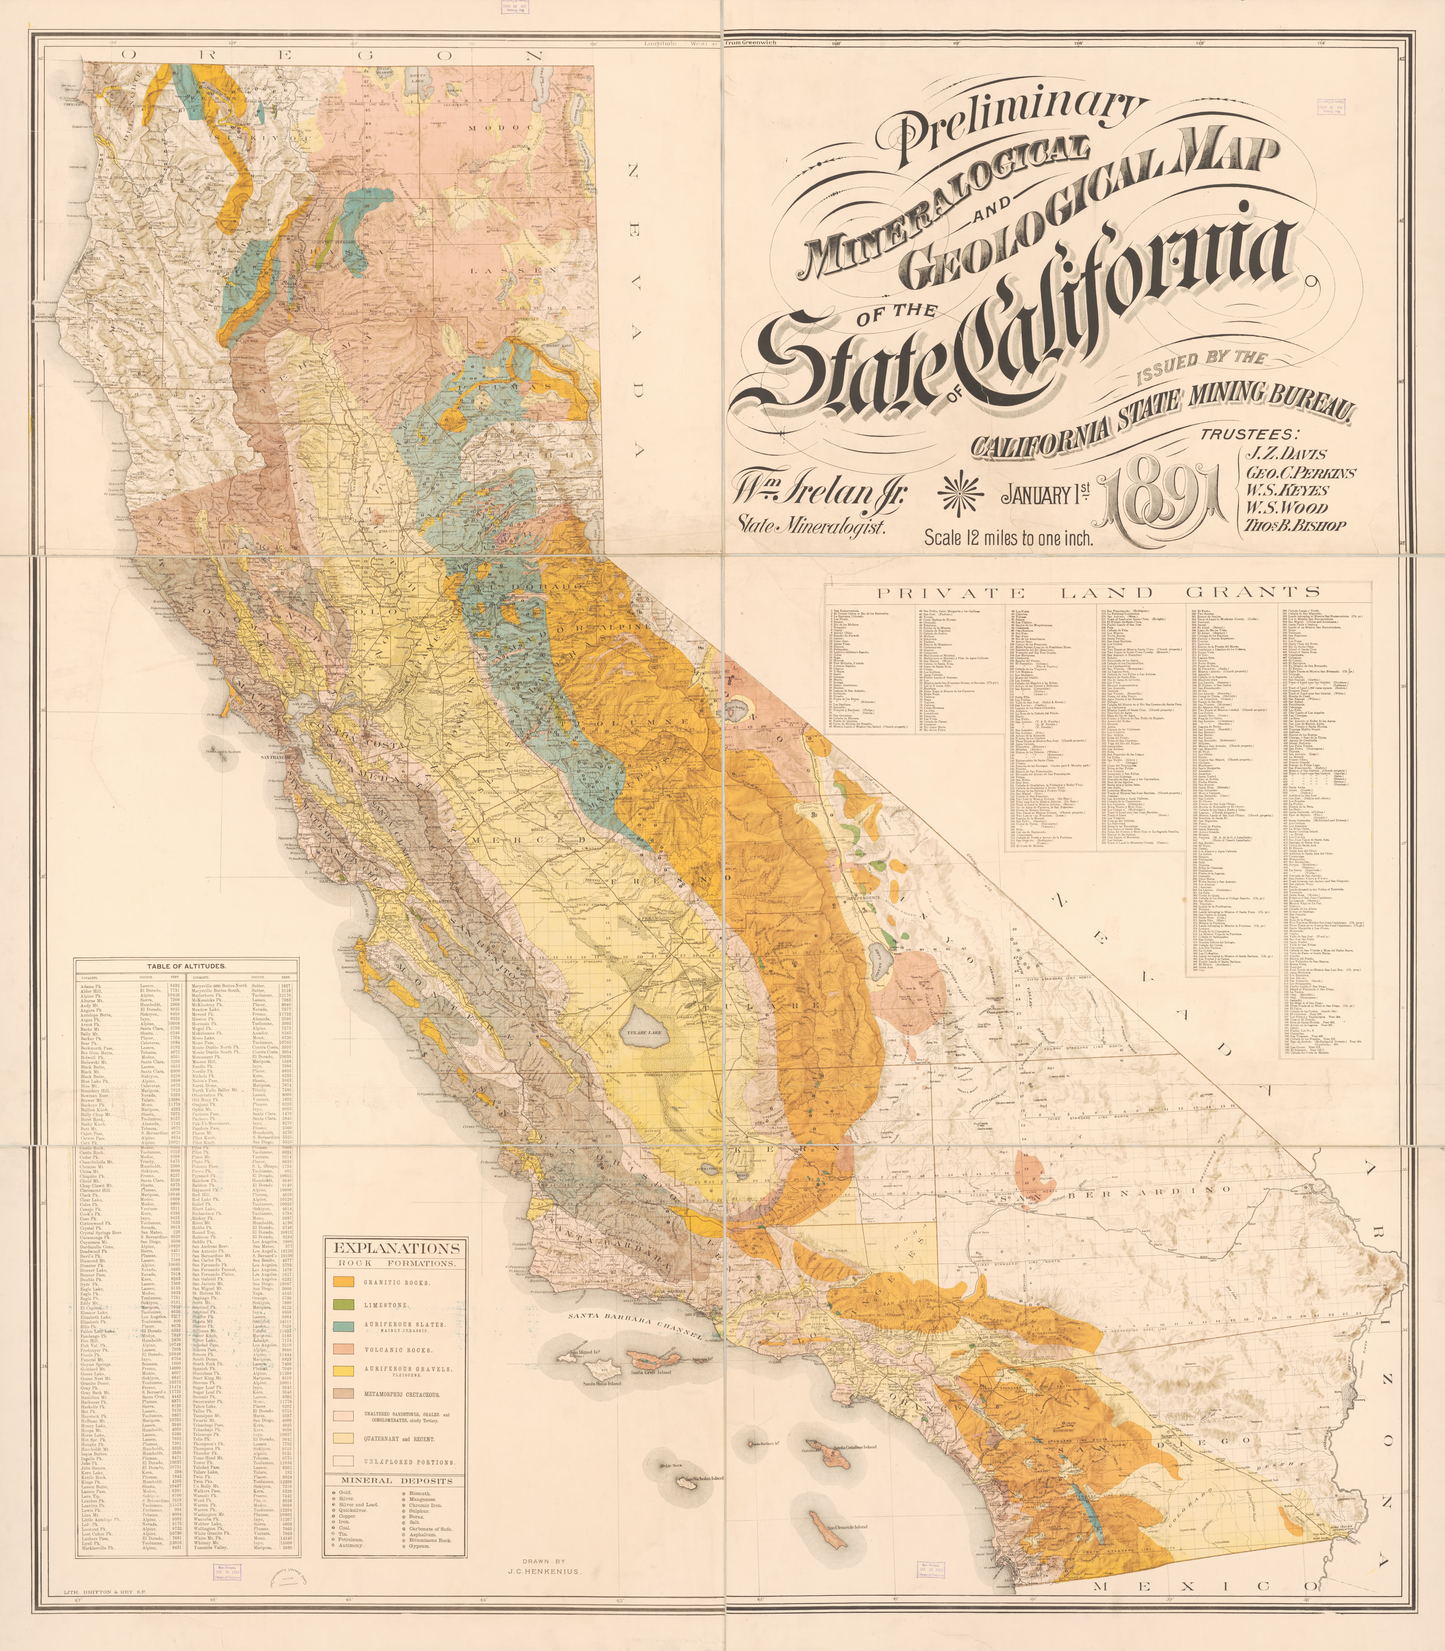 1891 Geological Map of California